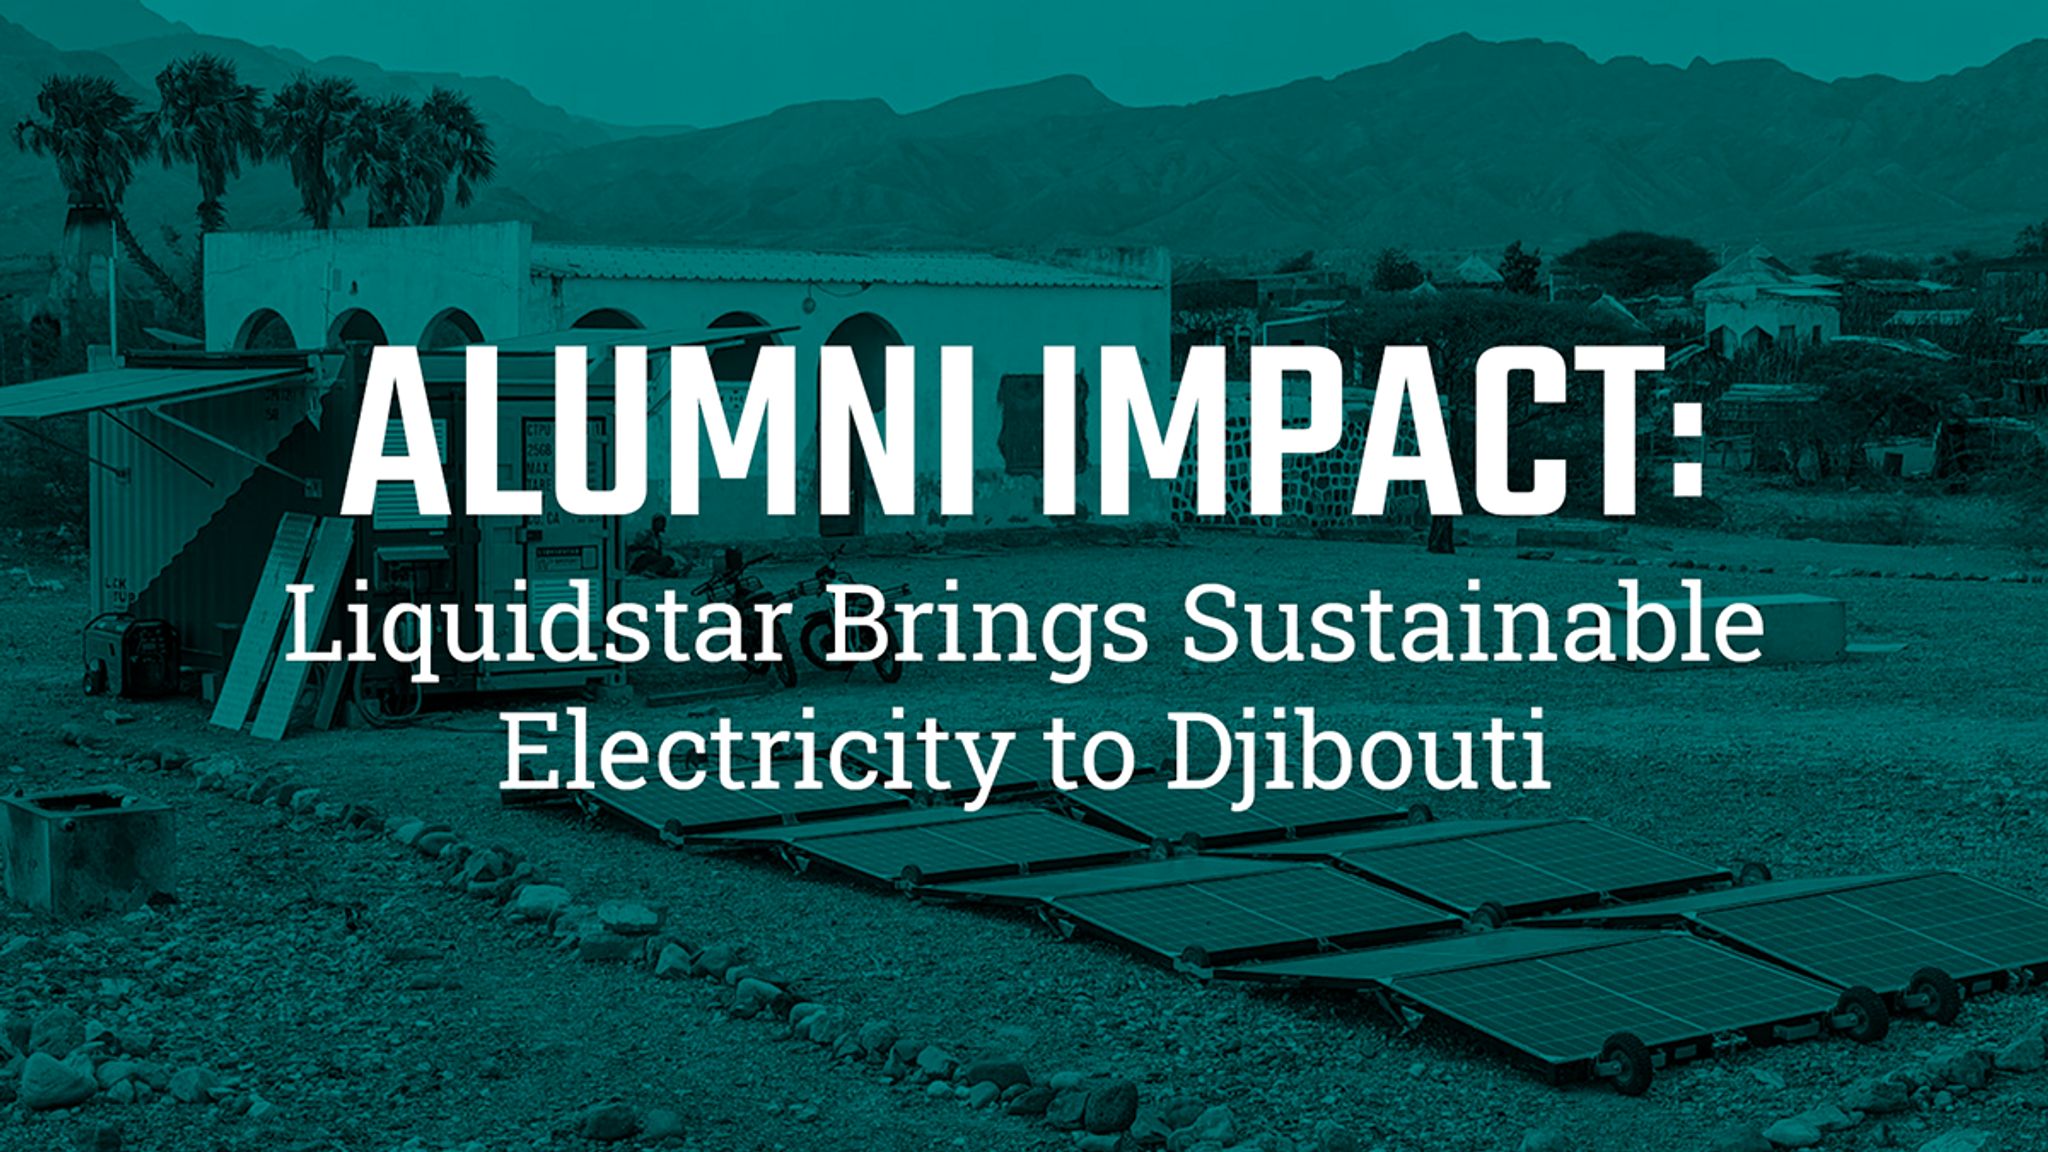 SBC Alumni, Liquidstar is Bringing Sustainable Electricity to Djibouti Community